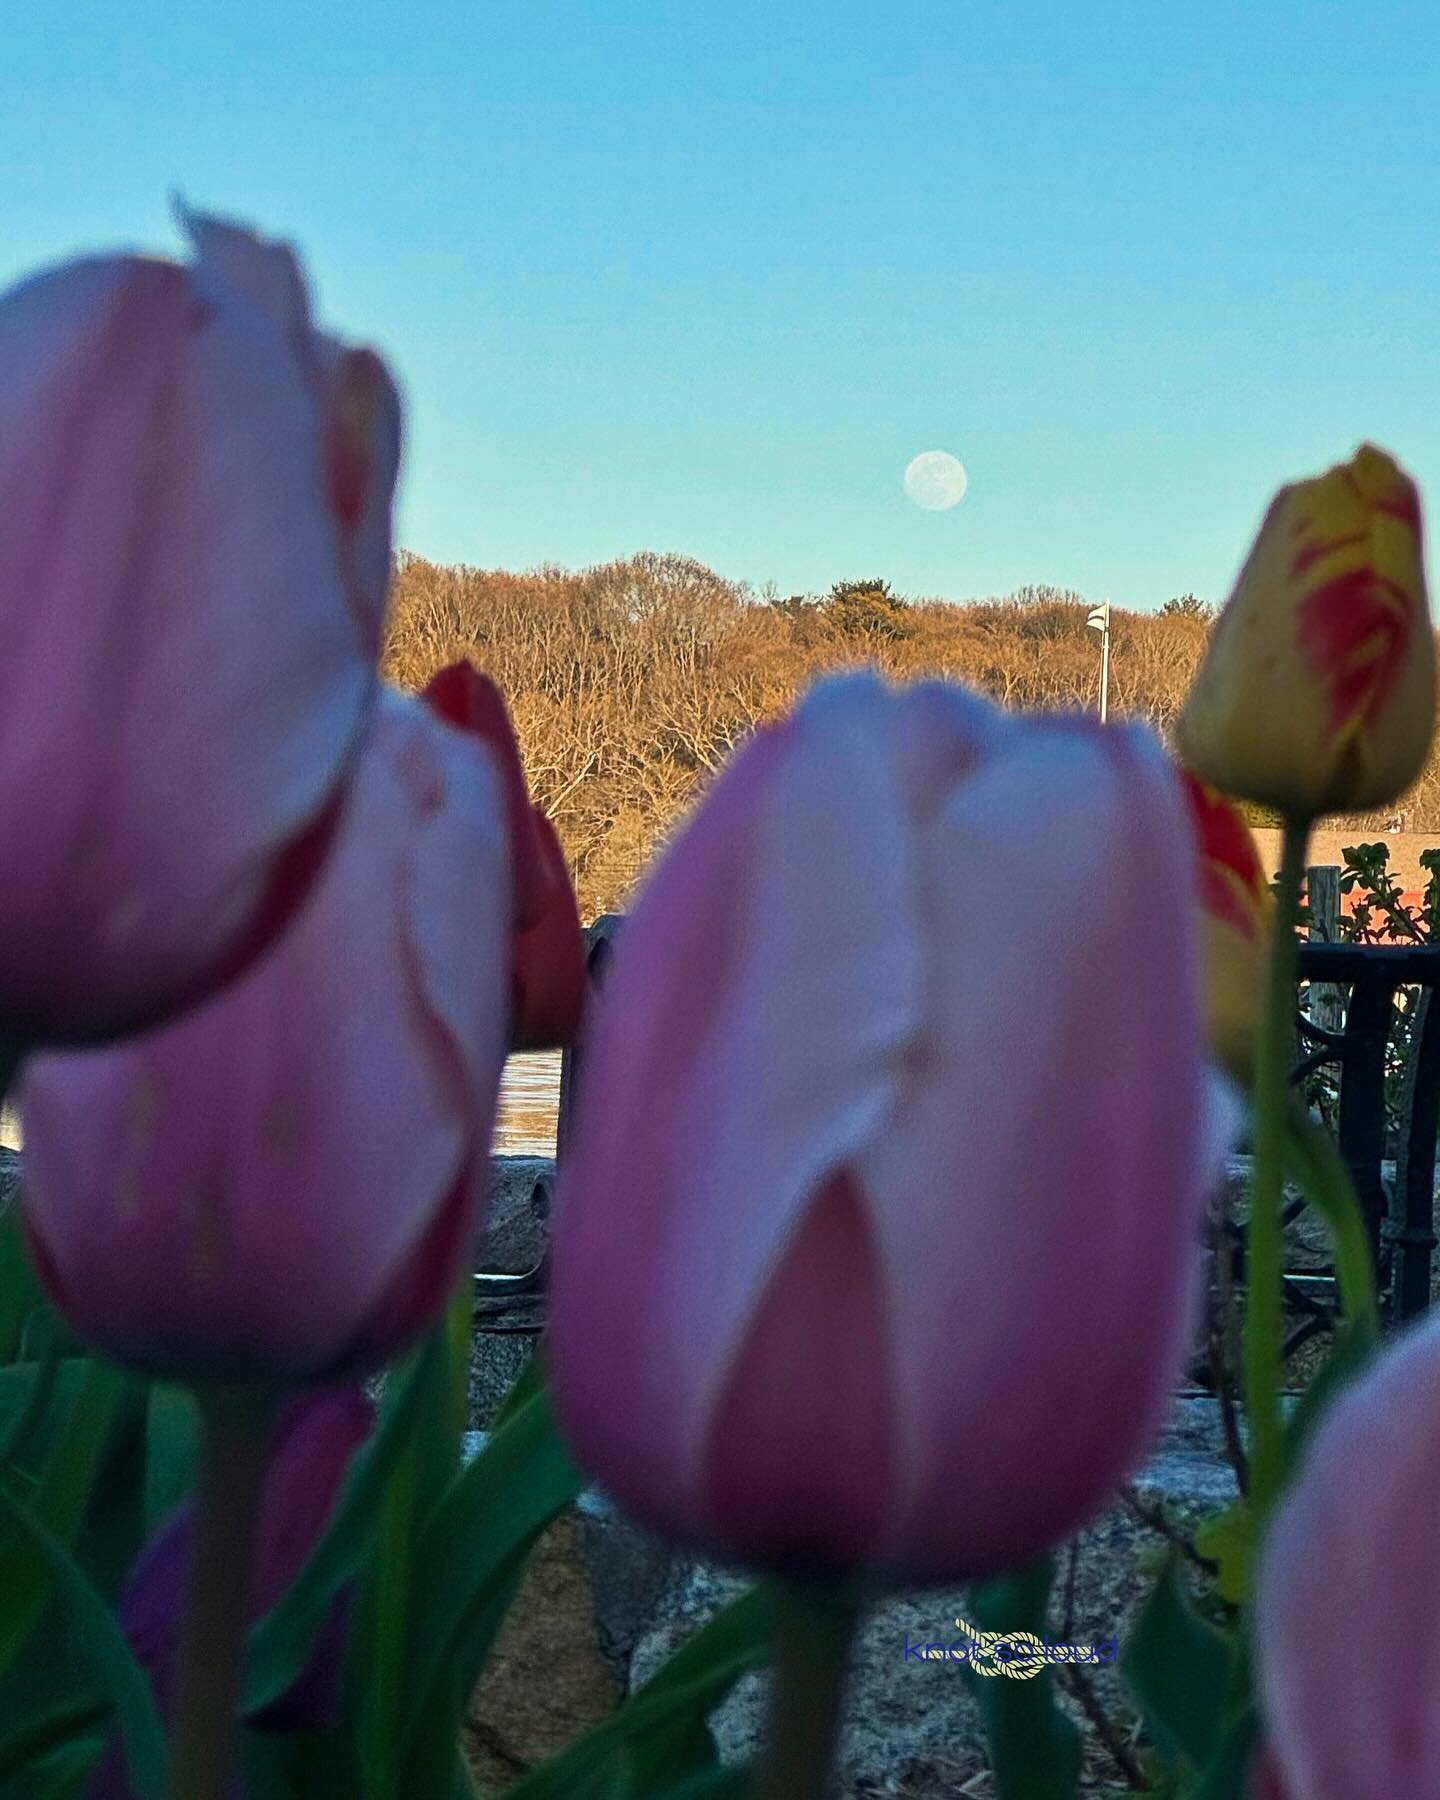 April&rsquo;s full moon &lsquo;Pink Moon&rsquo; 🌸

Photo 1 &amp; 2: 4/22 &mdash; Mystic, CT
Photo 3 &amp; 4: 4/23 &mdash; Groton, CT